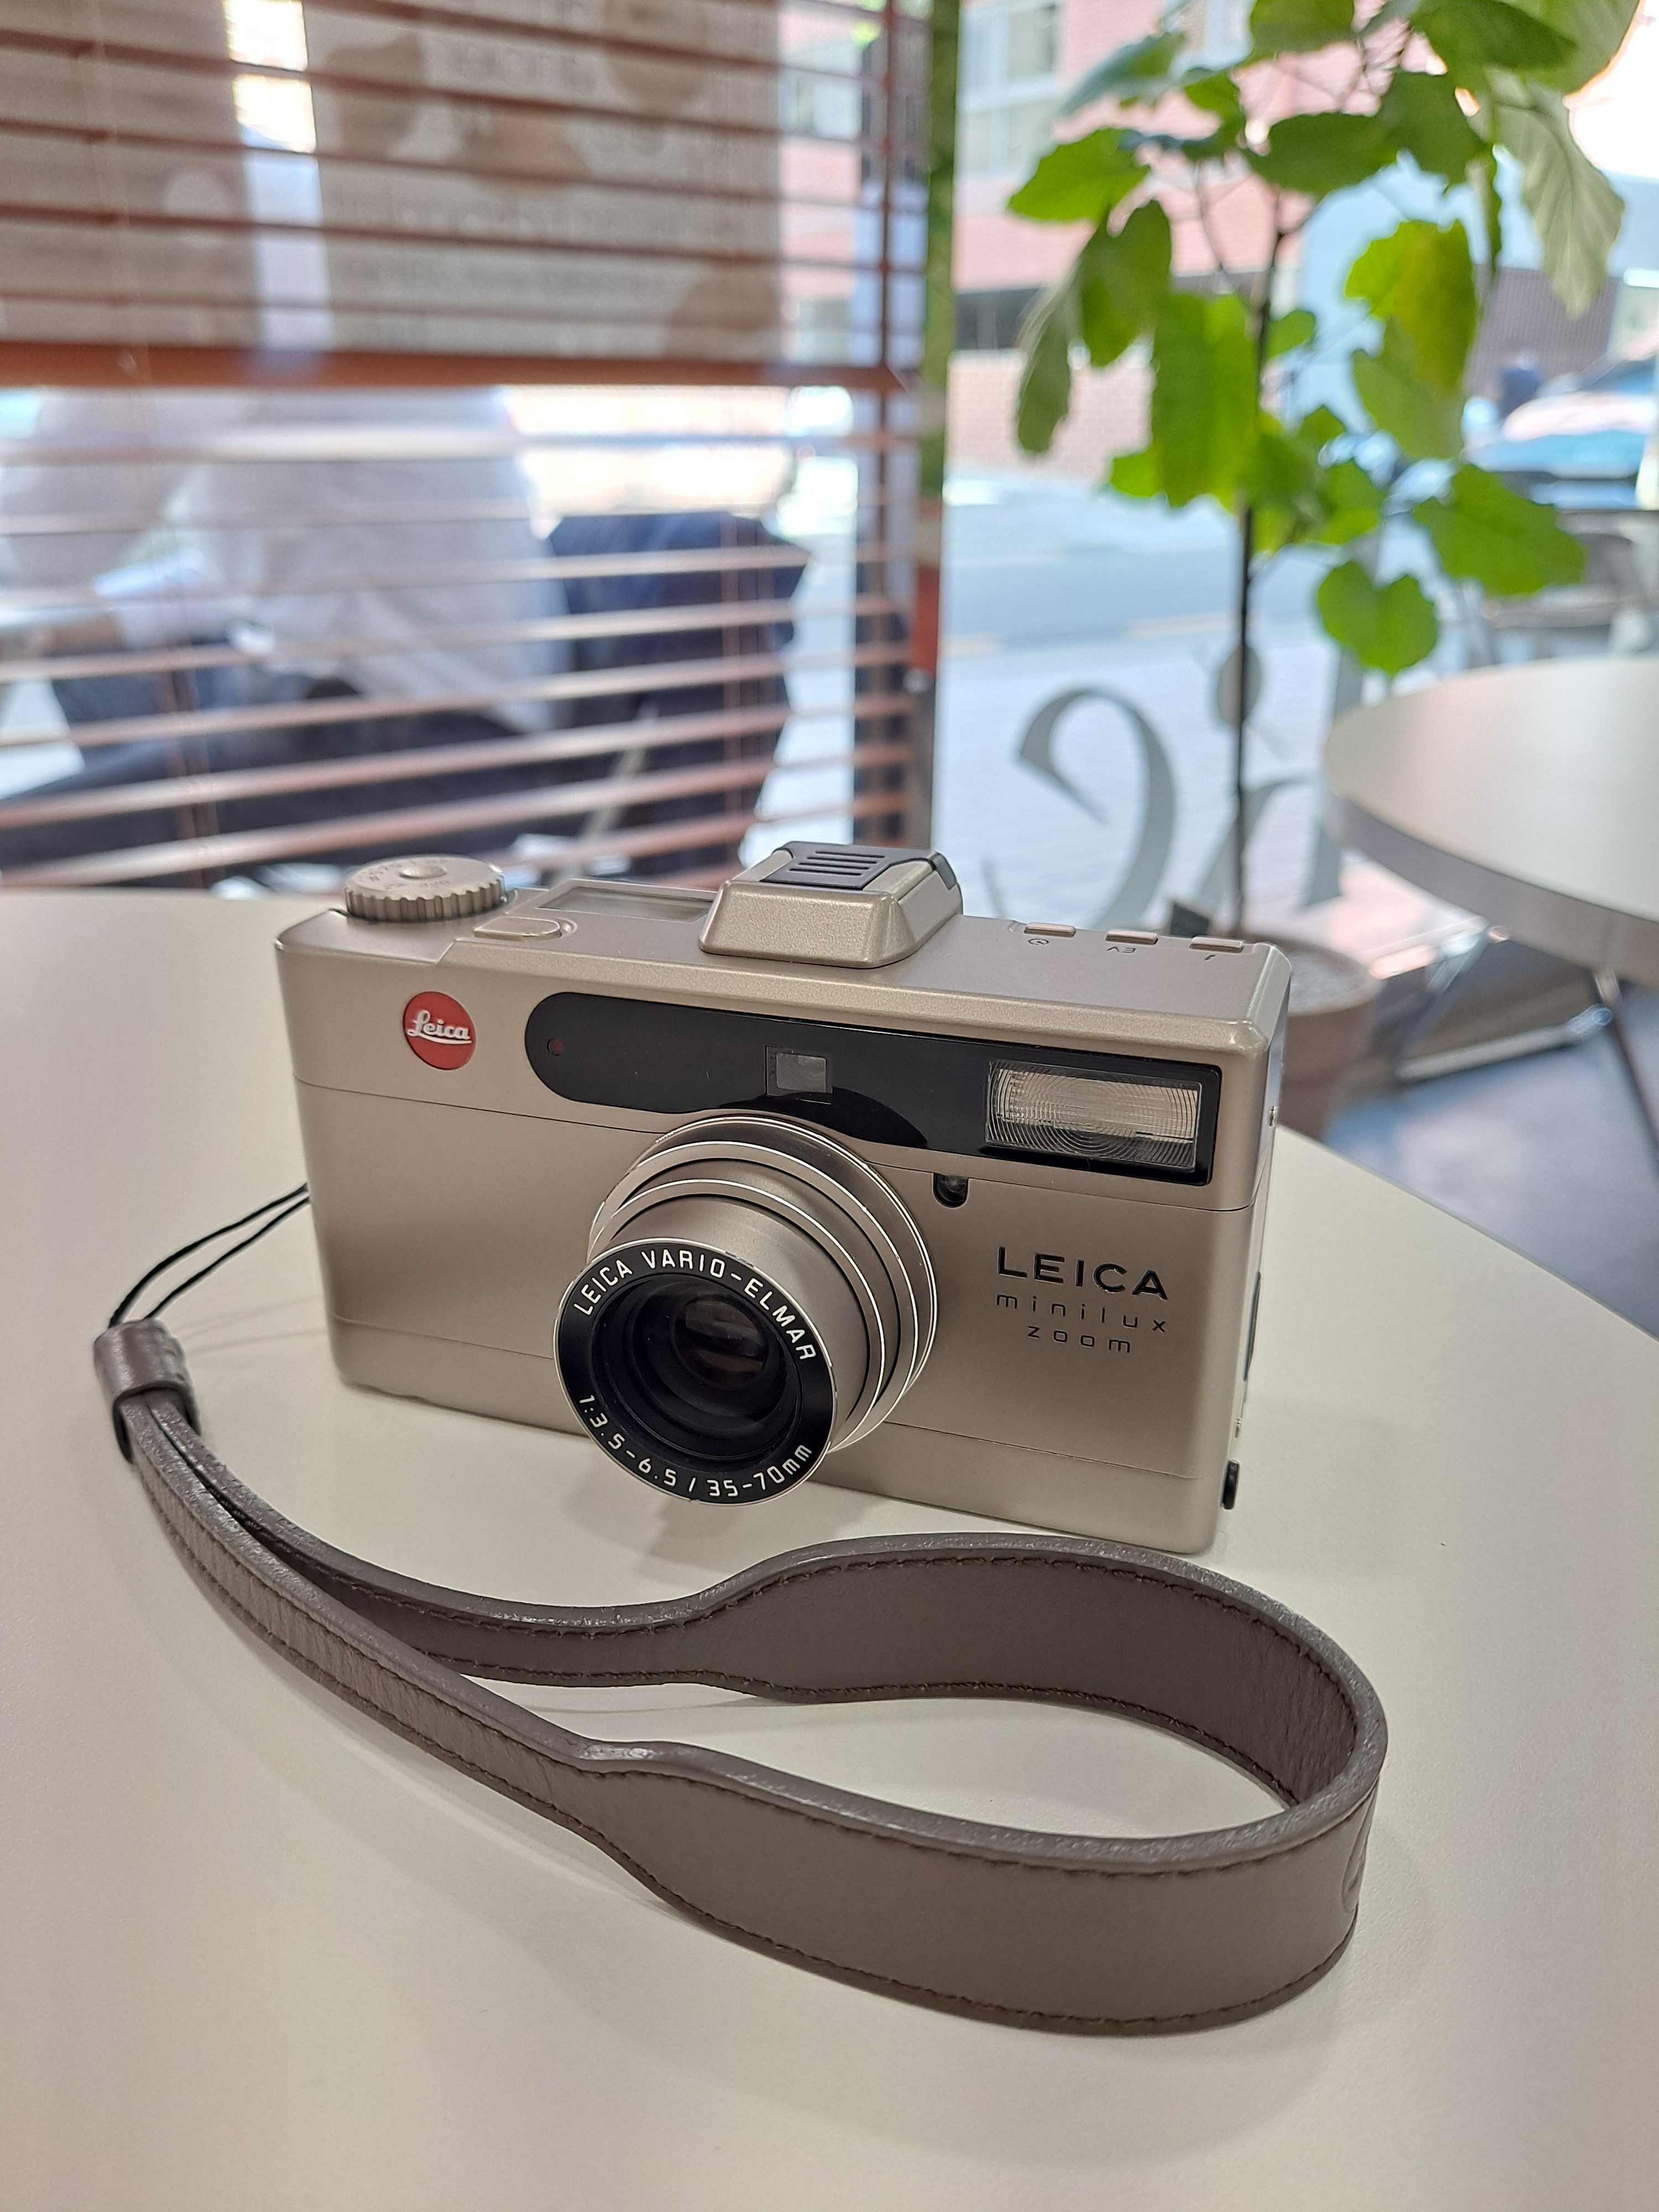 Leica Minilux Zoom